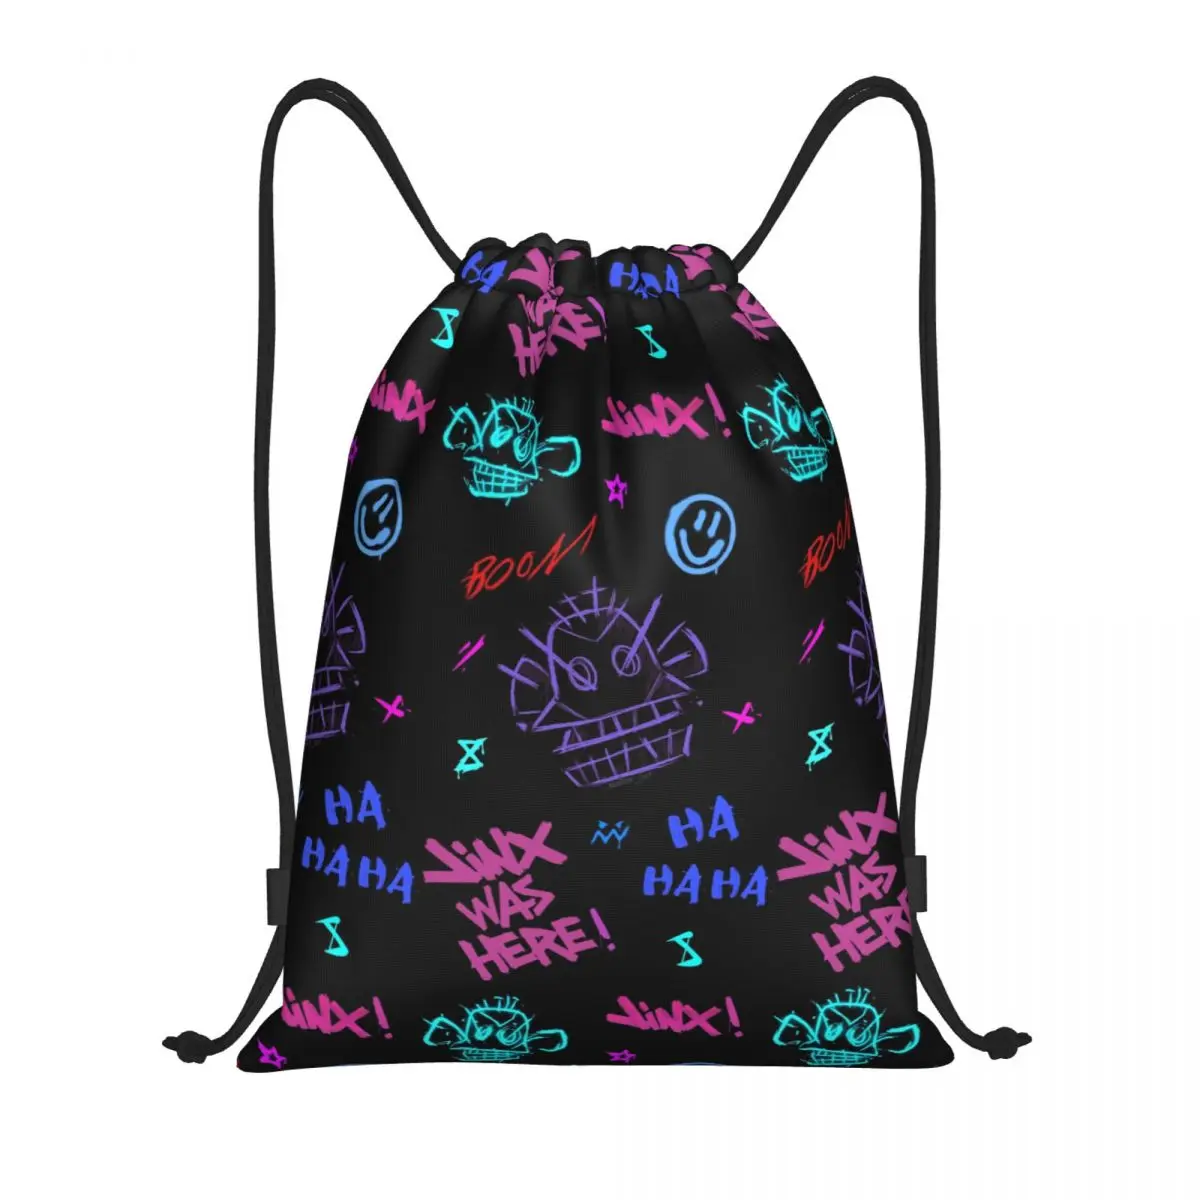 

League Battle Game Legends Arcane Drawstring Backpack Sports Gym Bag for Women Men Jinx Monkey Graffiti Shopping Sackpack